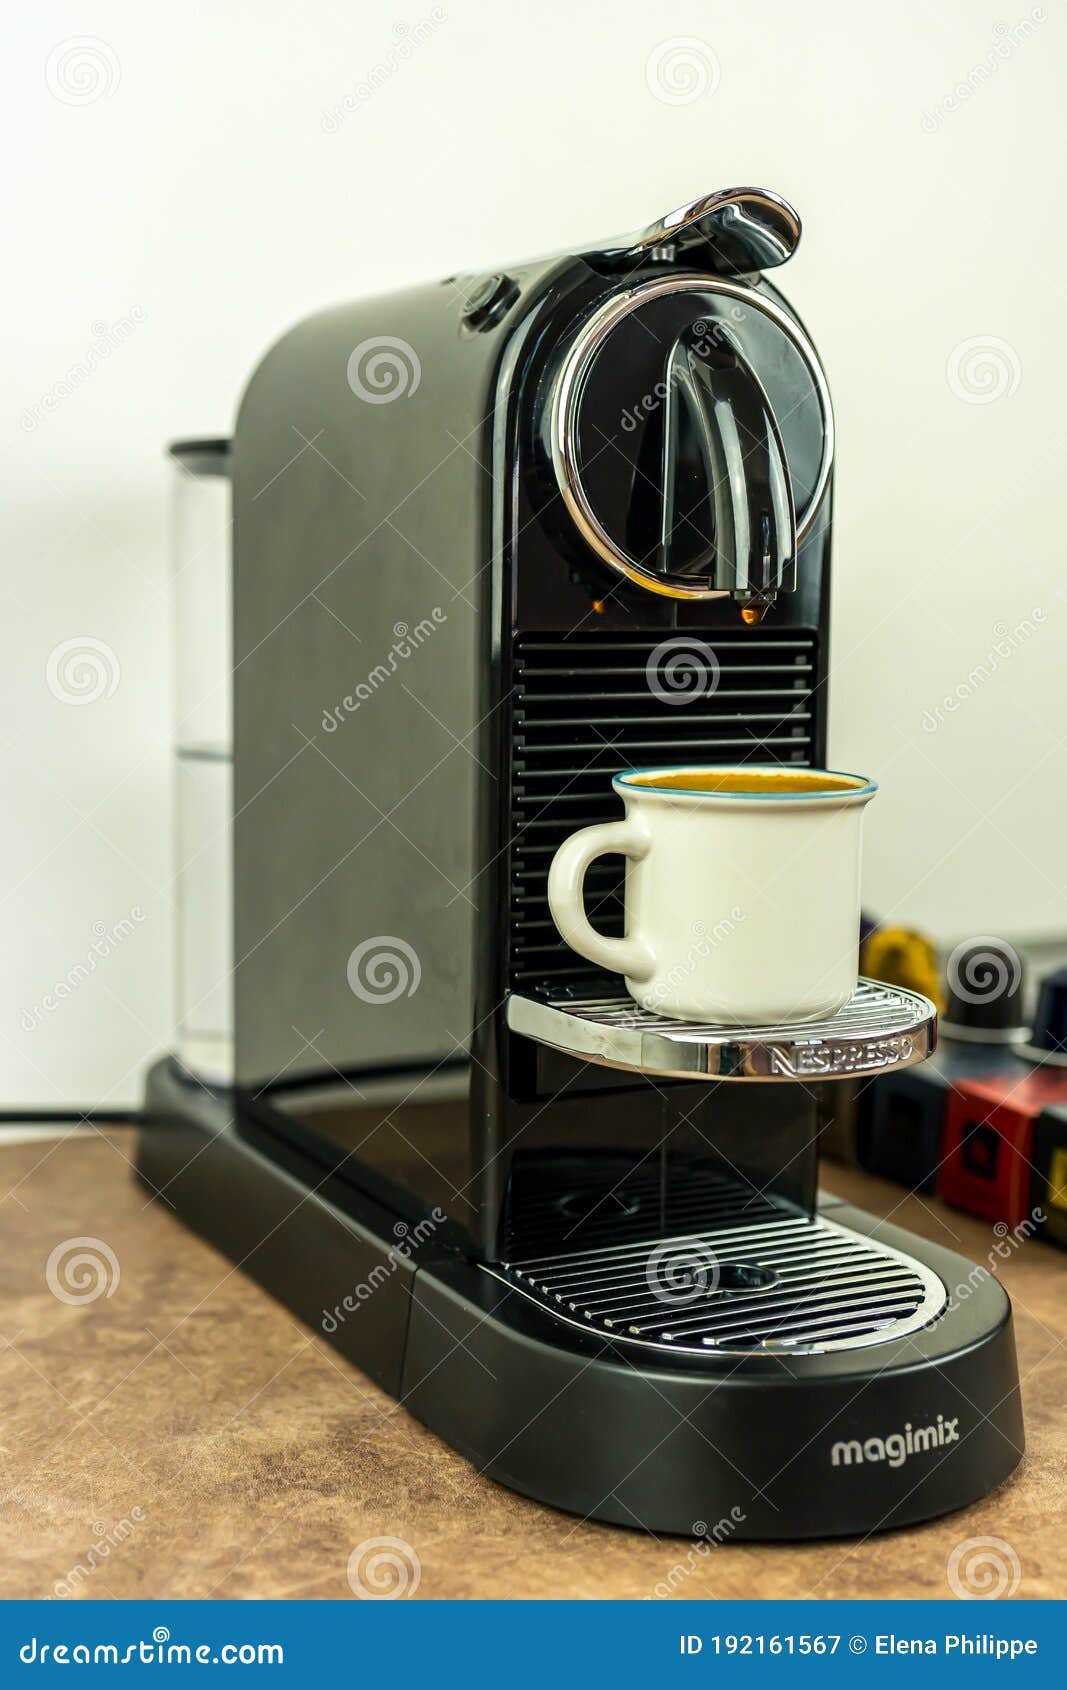 injecteren instructeur Praktisch Bayonne, France 23.06.2020 Coffee Espresso Preparing from Nespresso Coffee  Machine Editorial Photography - Image of breakfast, automatic: 192161567